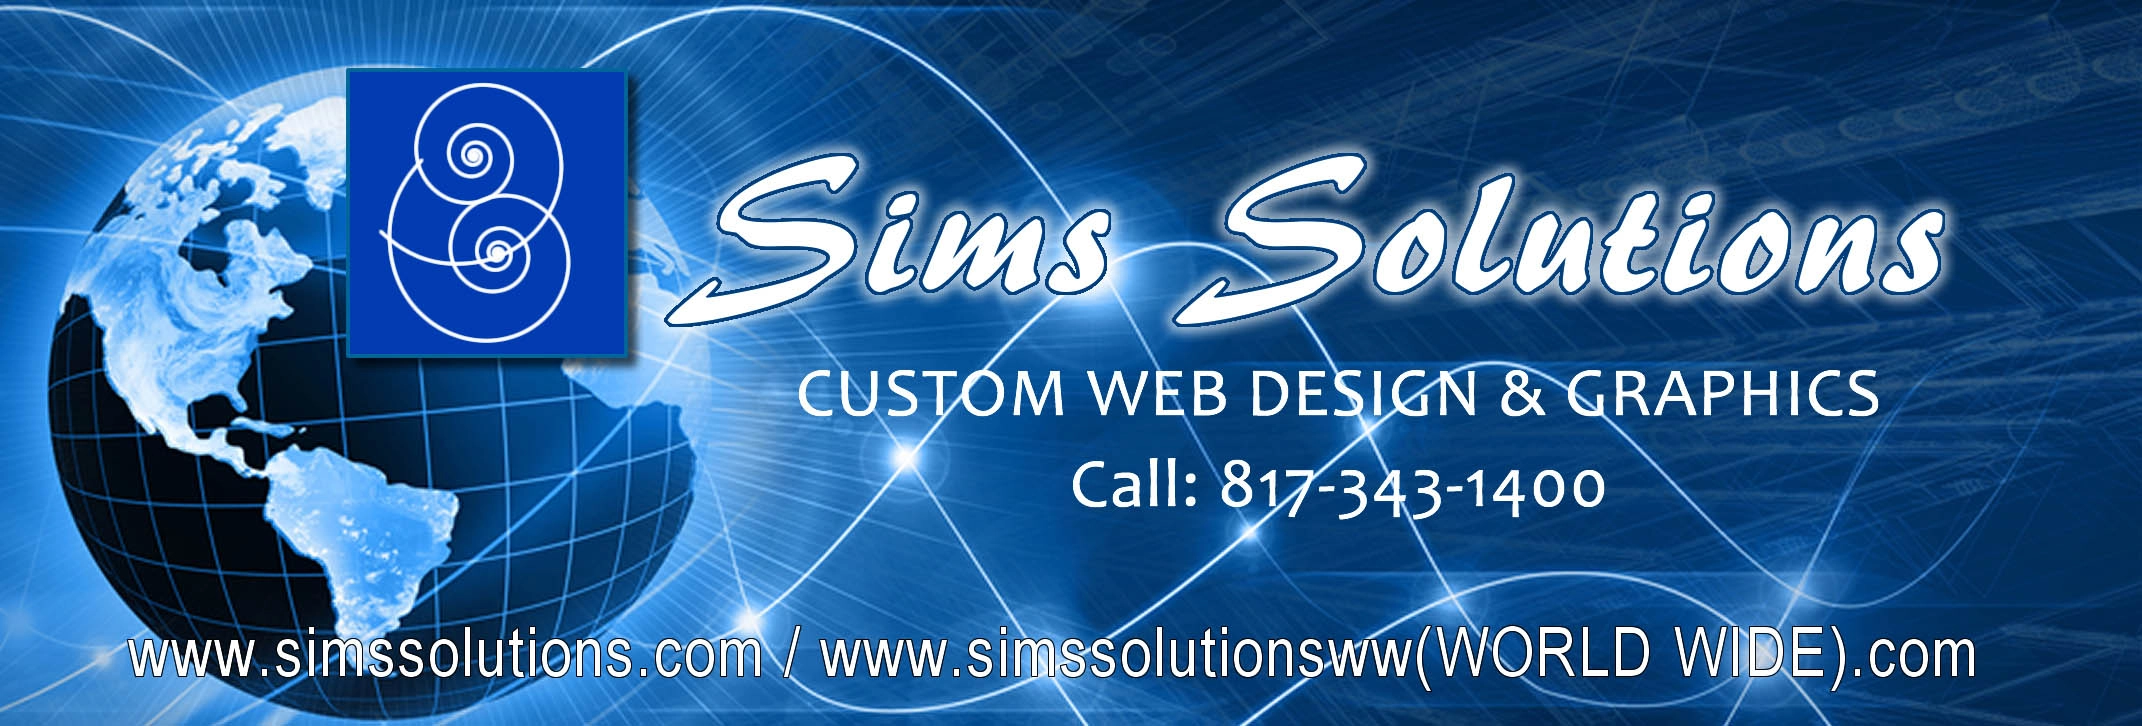 Sims Solutions Custom Web Design / www.simssolutions.com